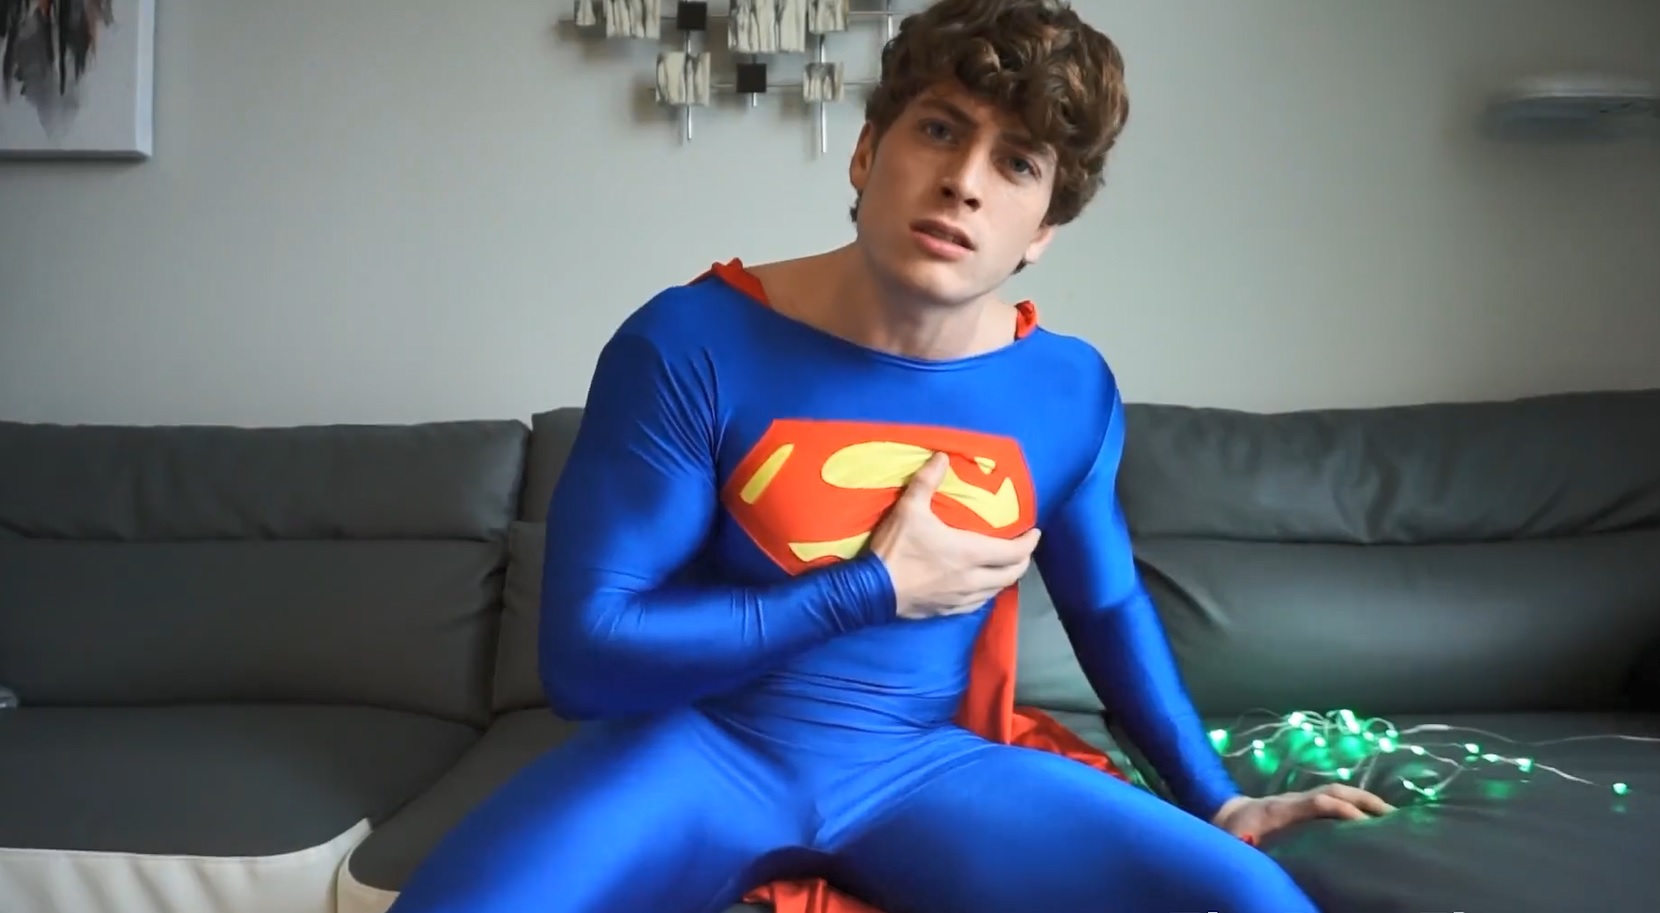 Hypno male: Superman dominated - ThisVid.com